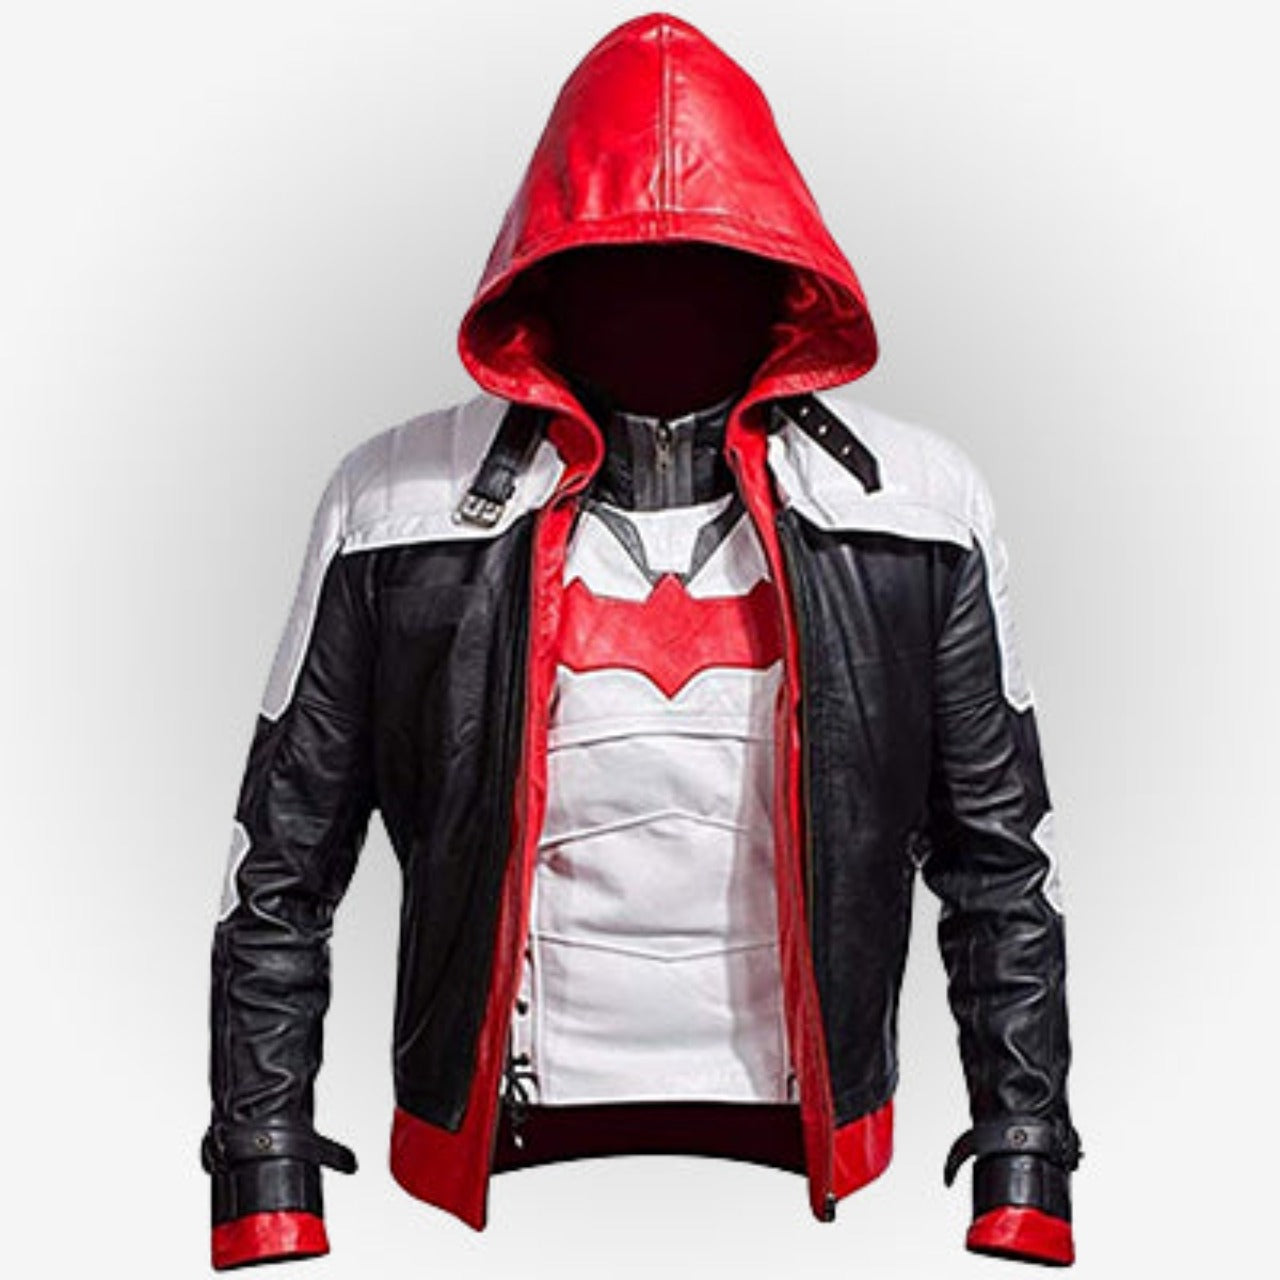 Batman Arkham Red Hood Leather Jacket with Vest